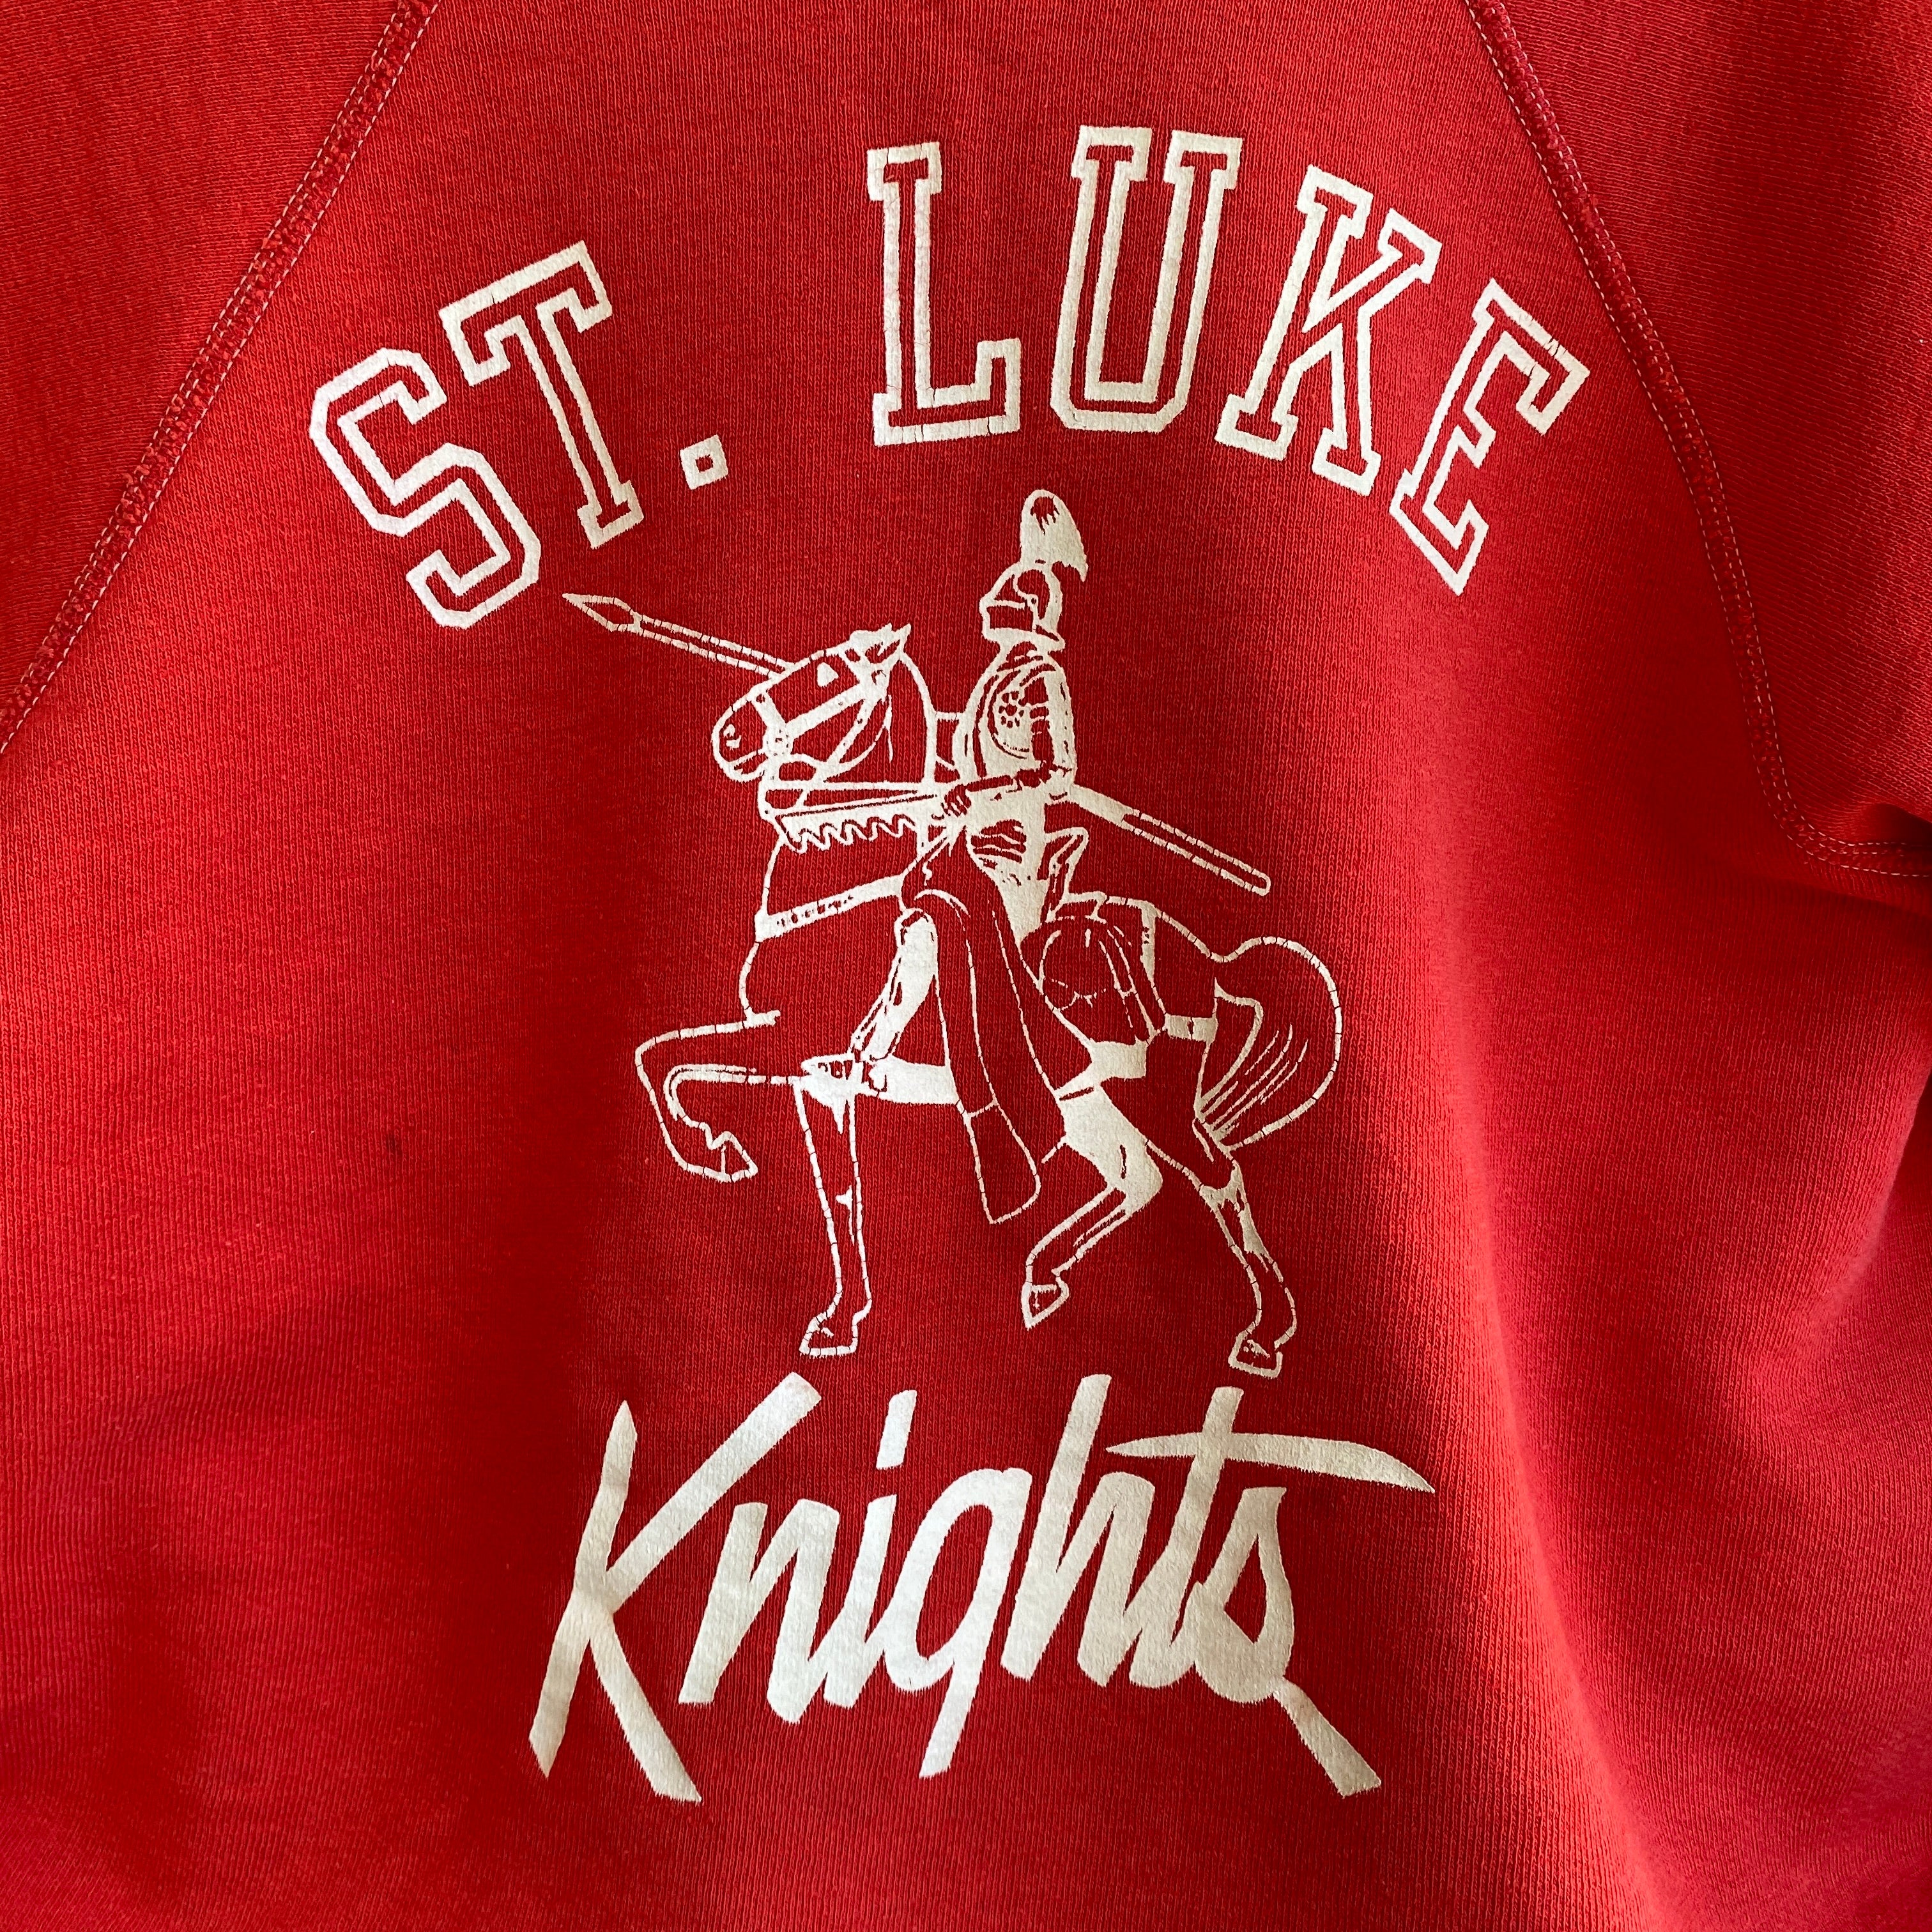 1960s HANESPORT!!! St. Luke Knigts Smaller Sized 100% AMERICAN COTTON Sweatshirt!!!